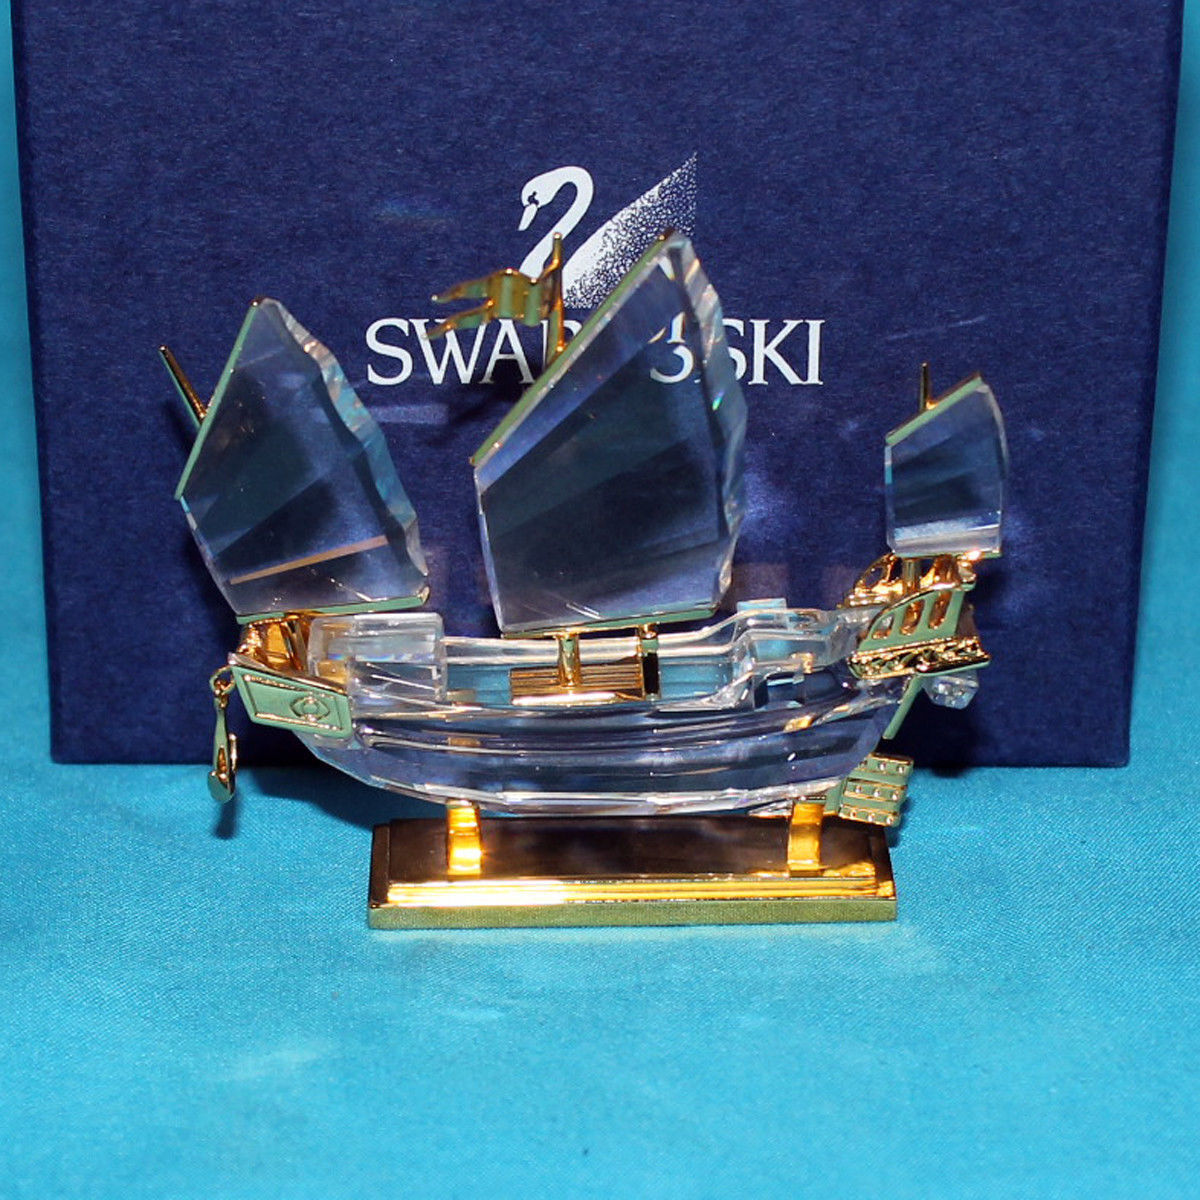 Swarovski - Figurine, Chinese Junk Ship